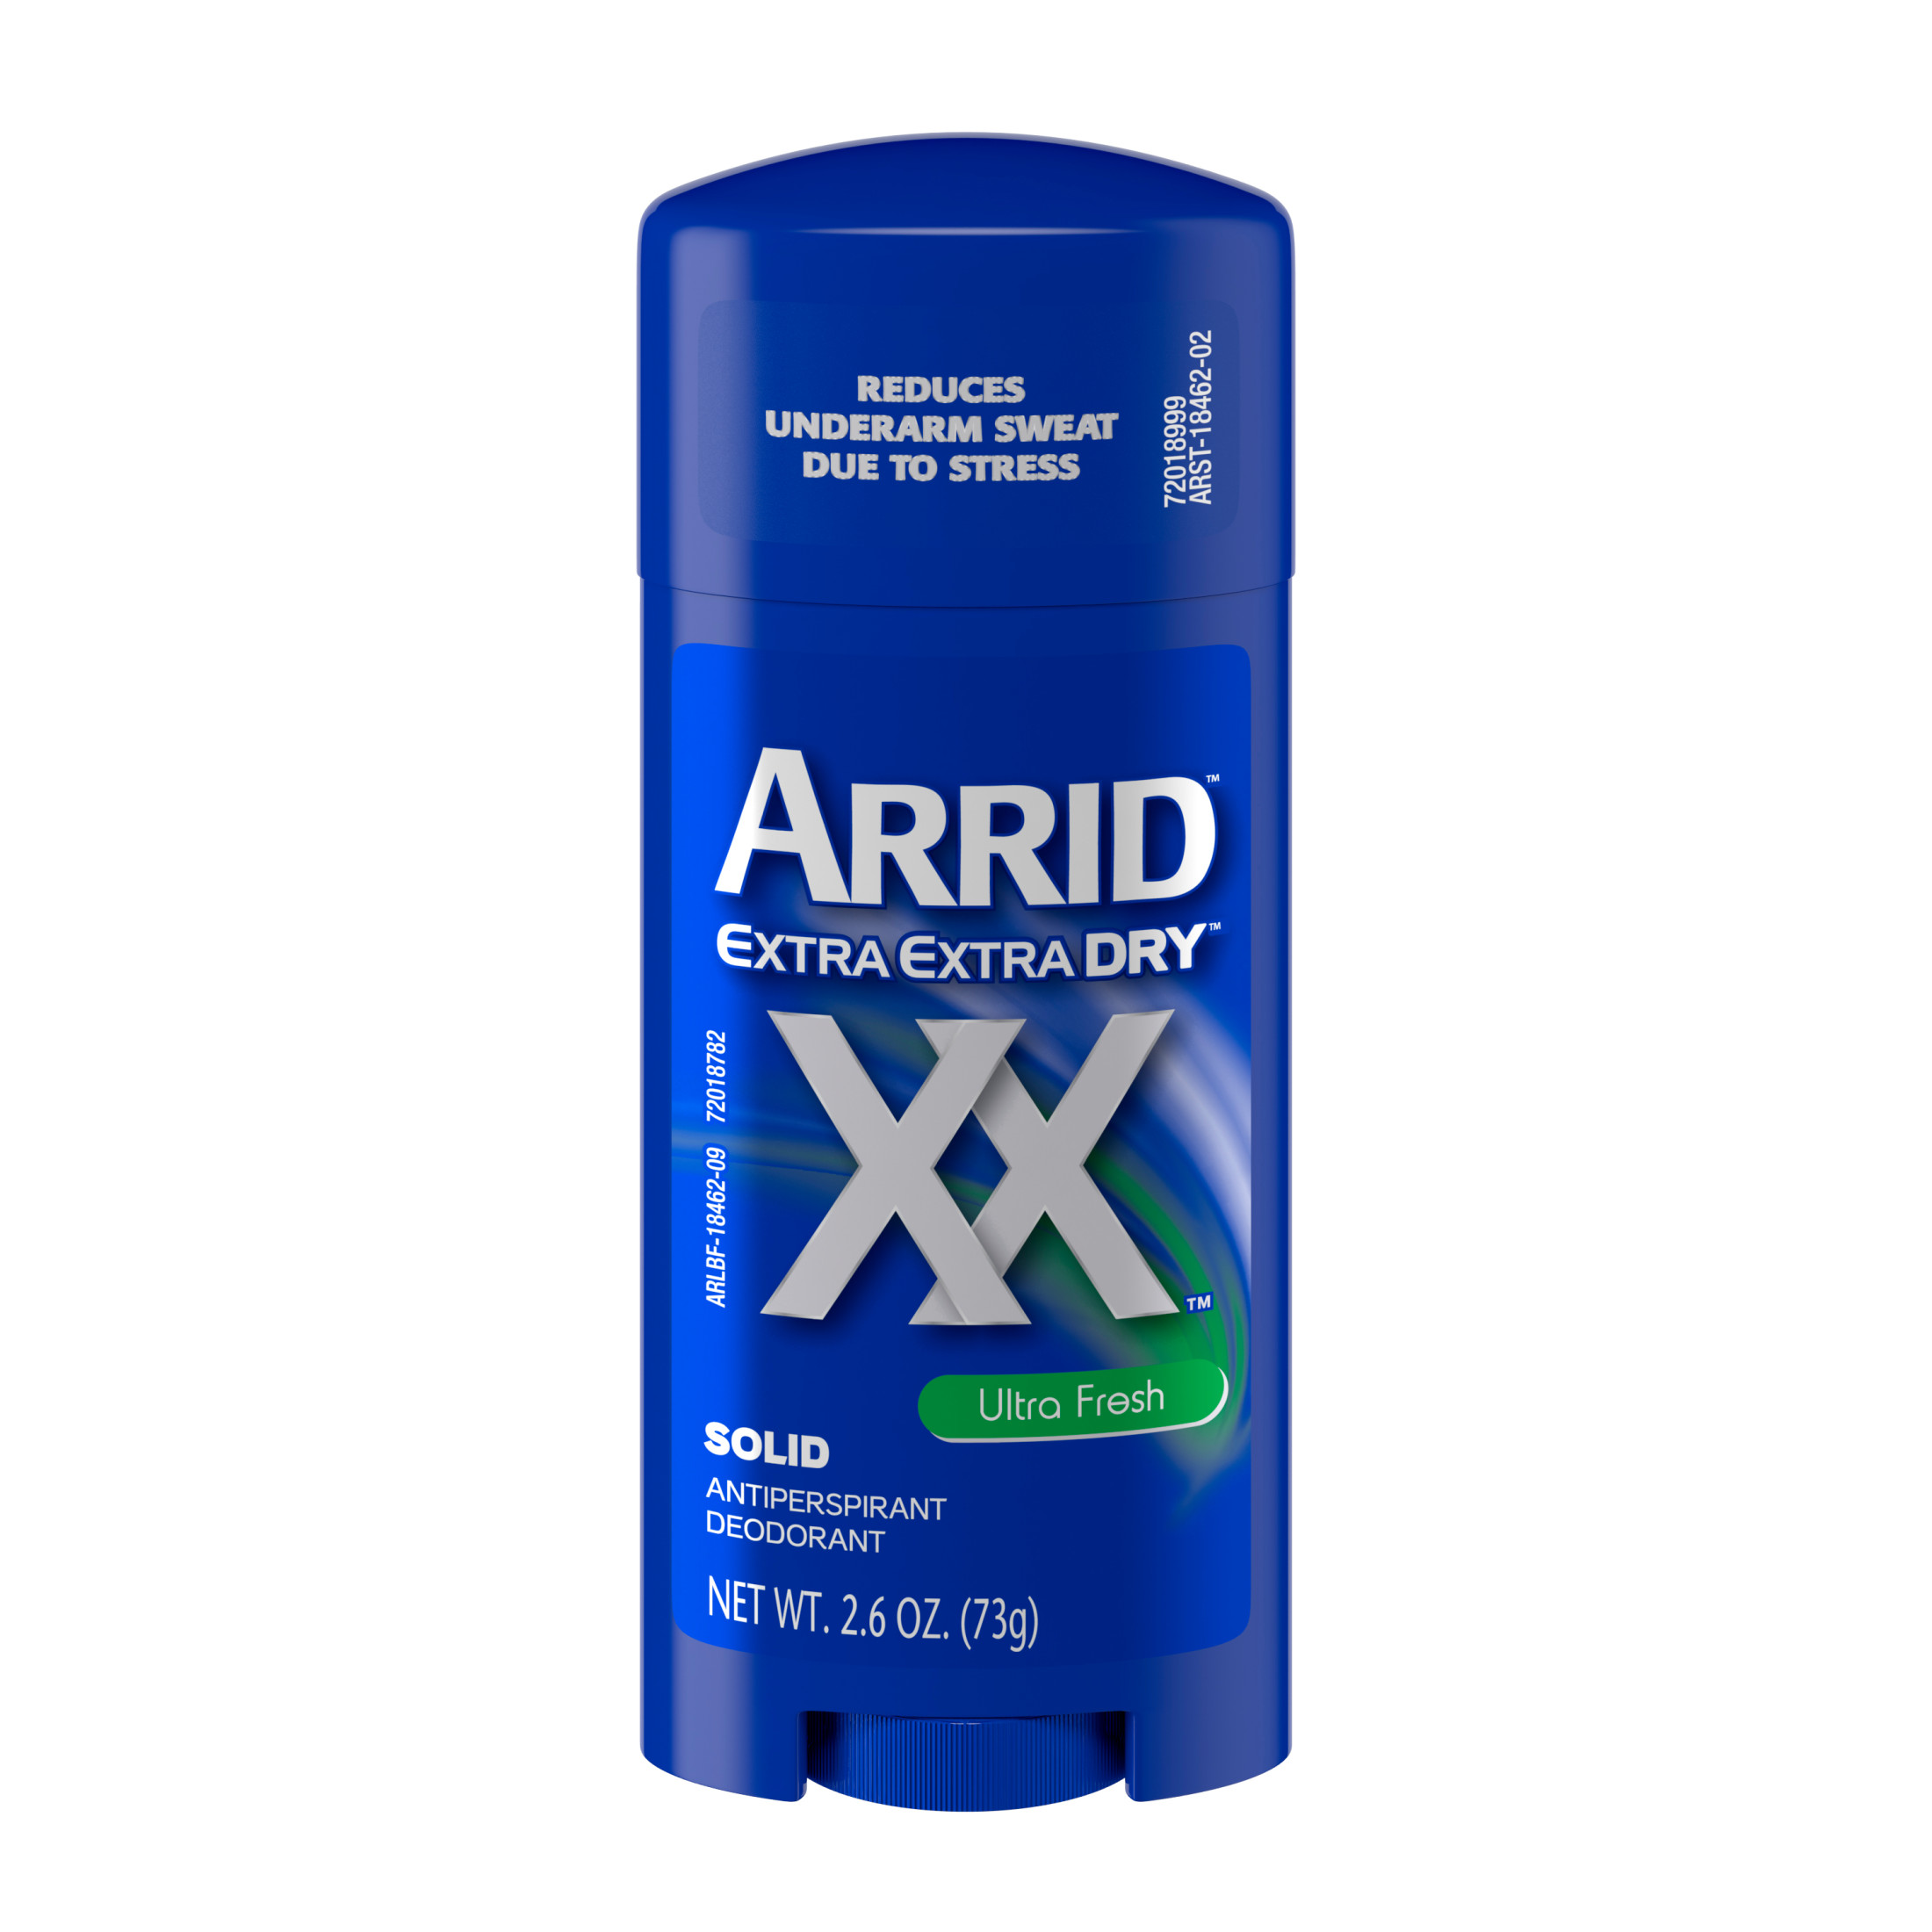 Arrid XX Extra Extra Dry Solid Antiperspirant Deodorant, Ultra Fresh, 2.6 oz. - image 1 of 3